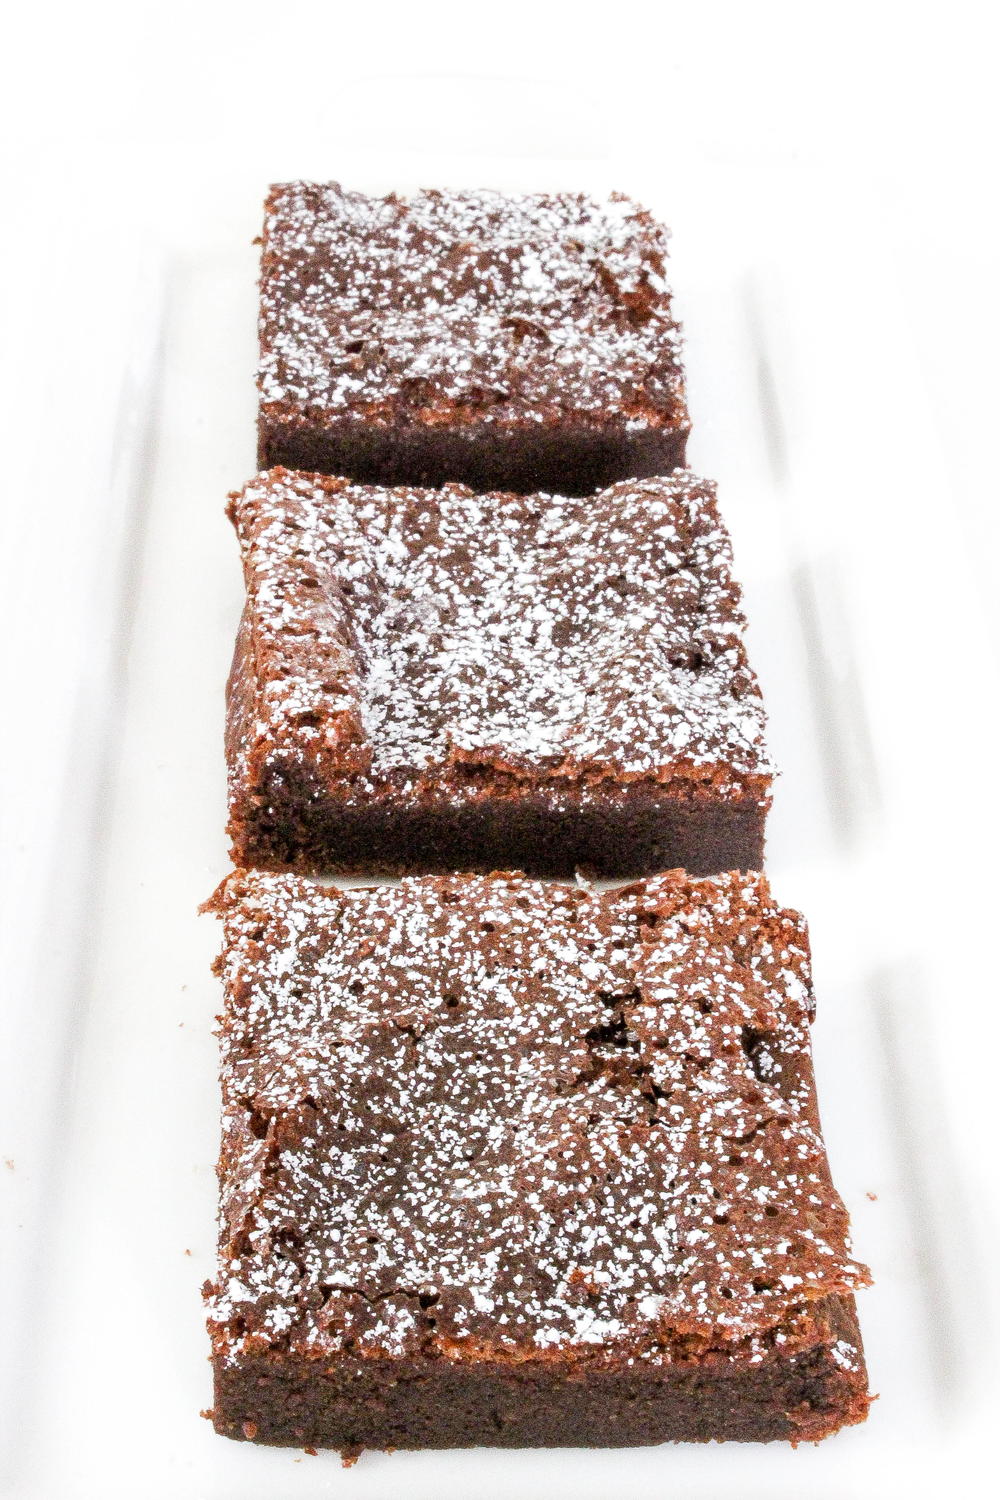 2 Ingredient Brownies | TheBestDessertRecipes.com